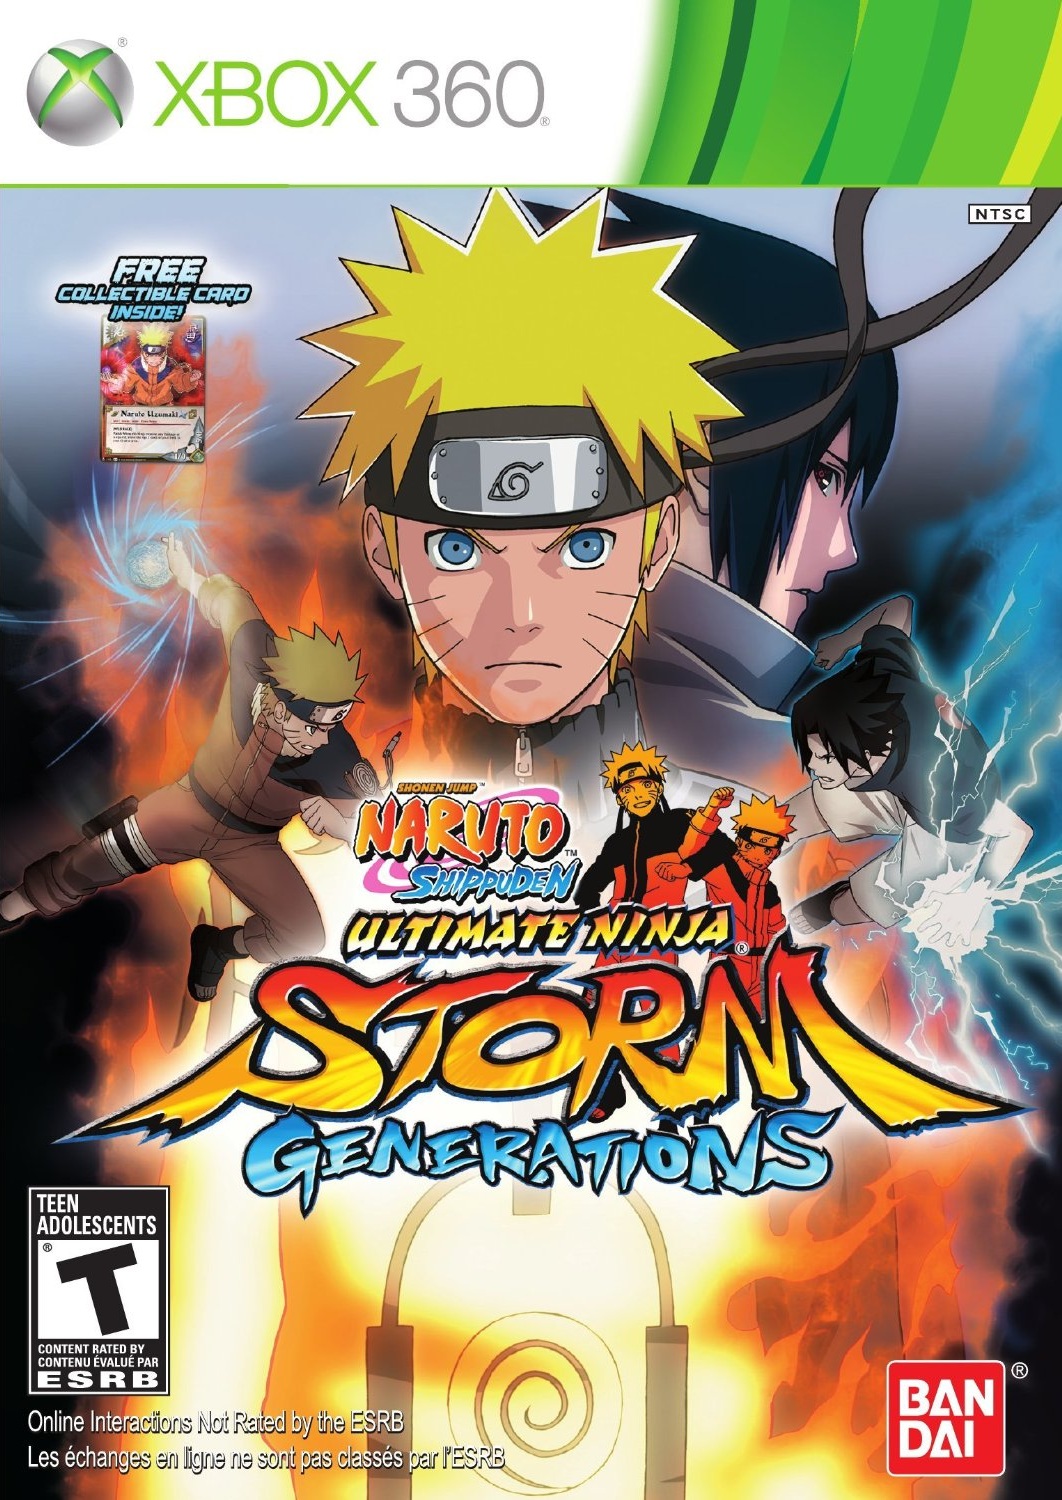 naruto ultimate ninja storm 4 free roam